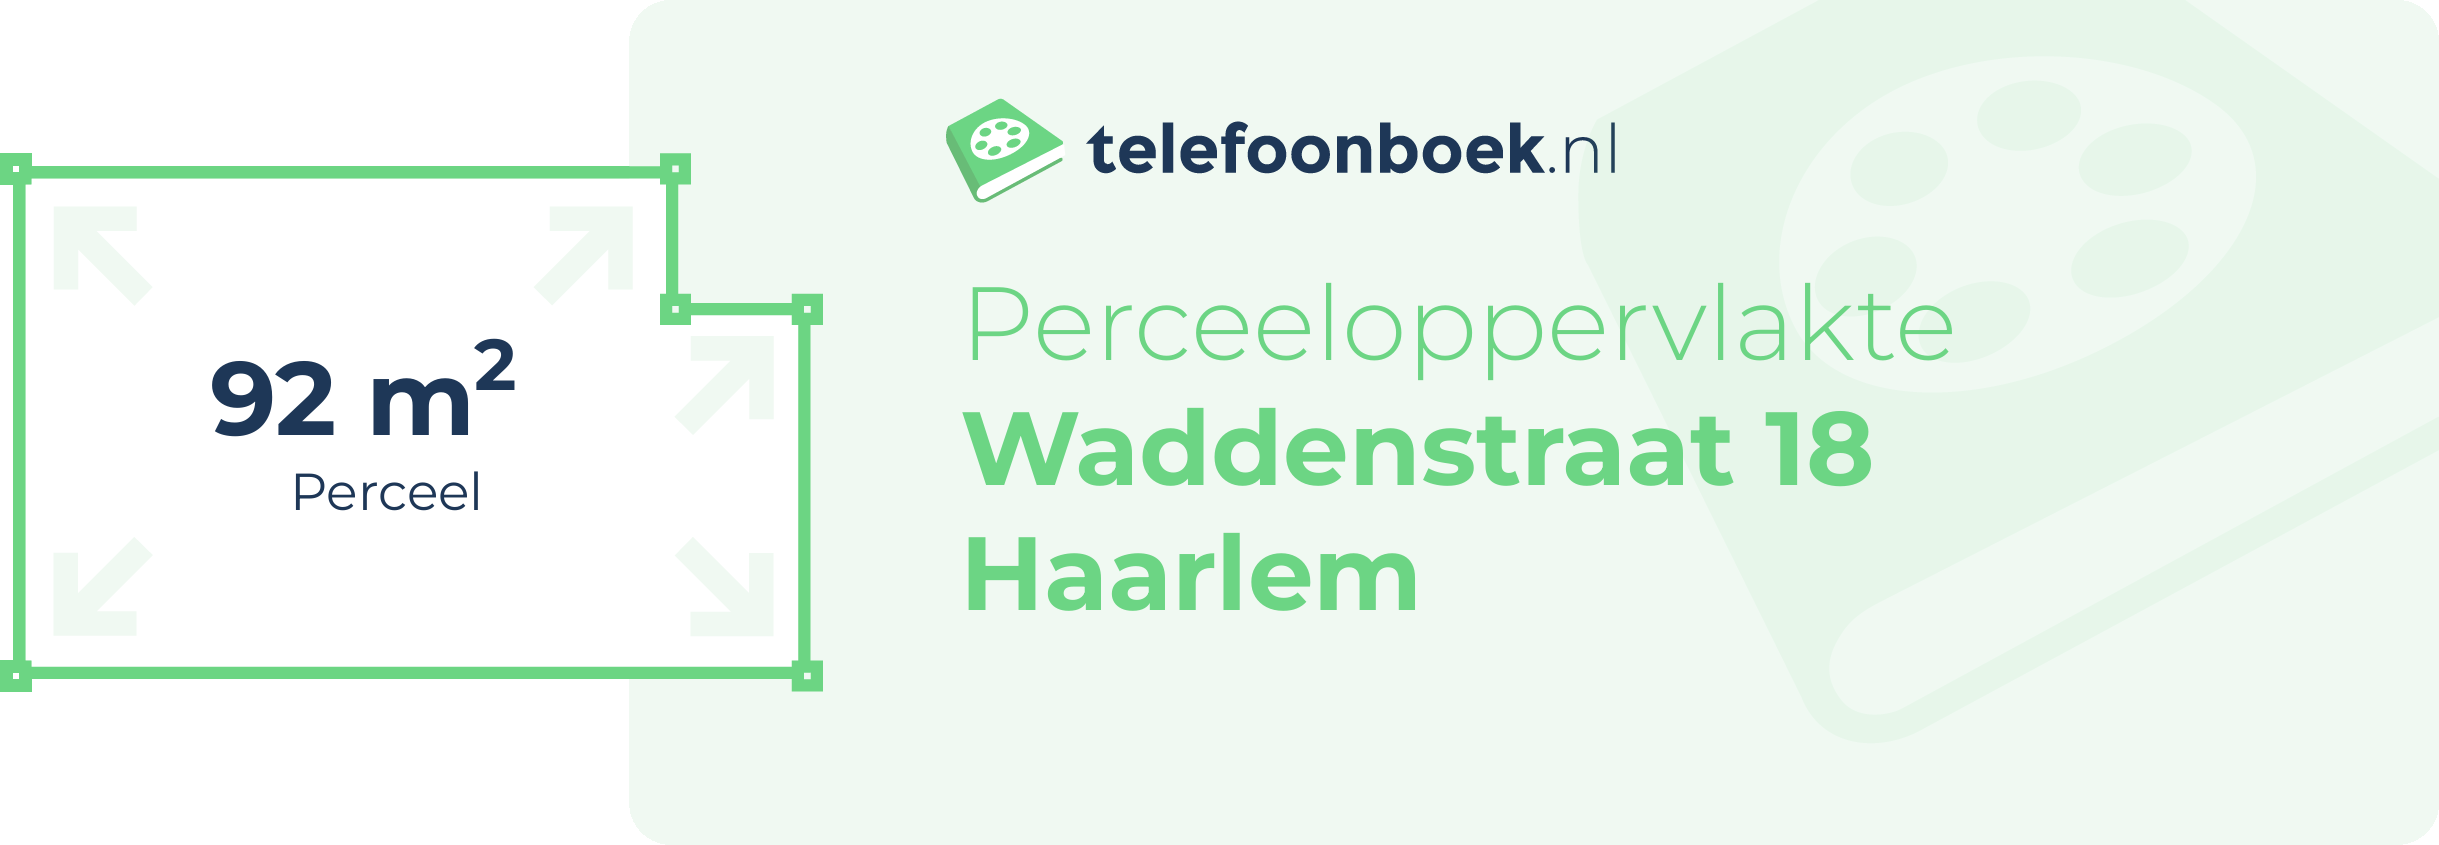 Perceeloppervlakte Waddenstraat 18 Haarlem